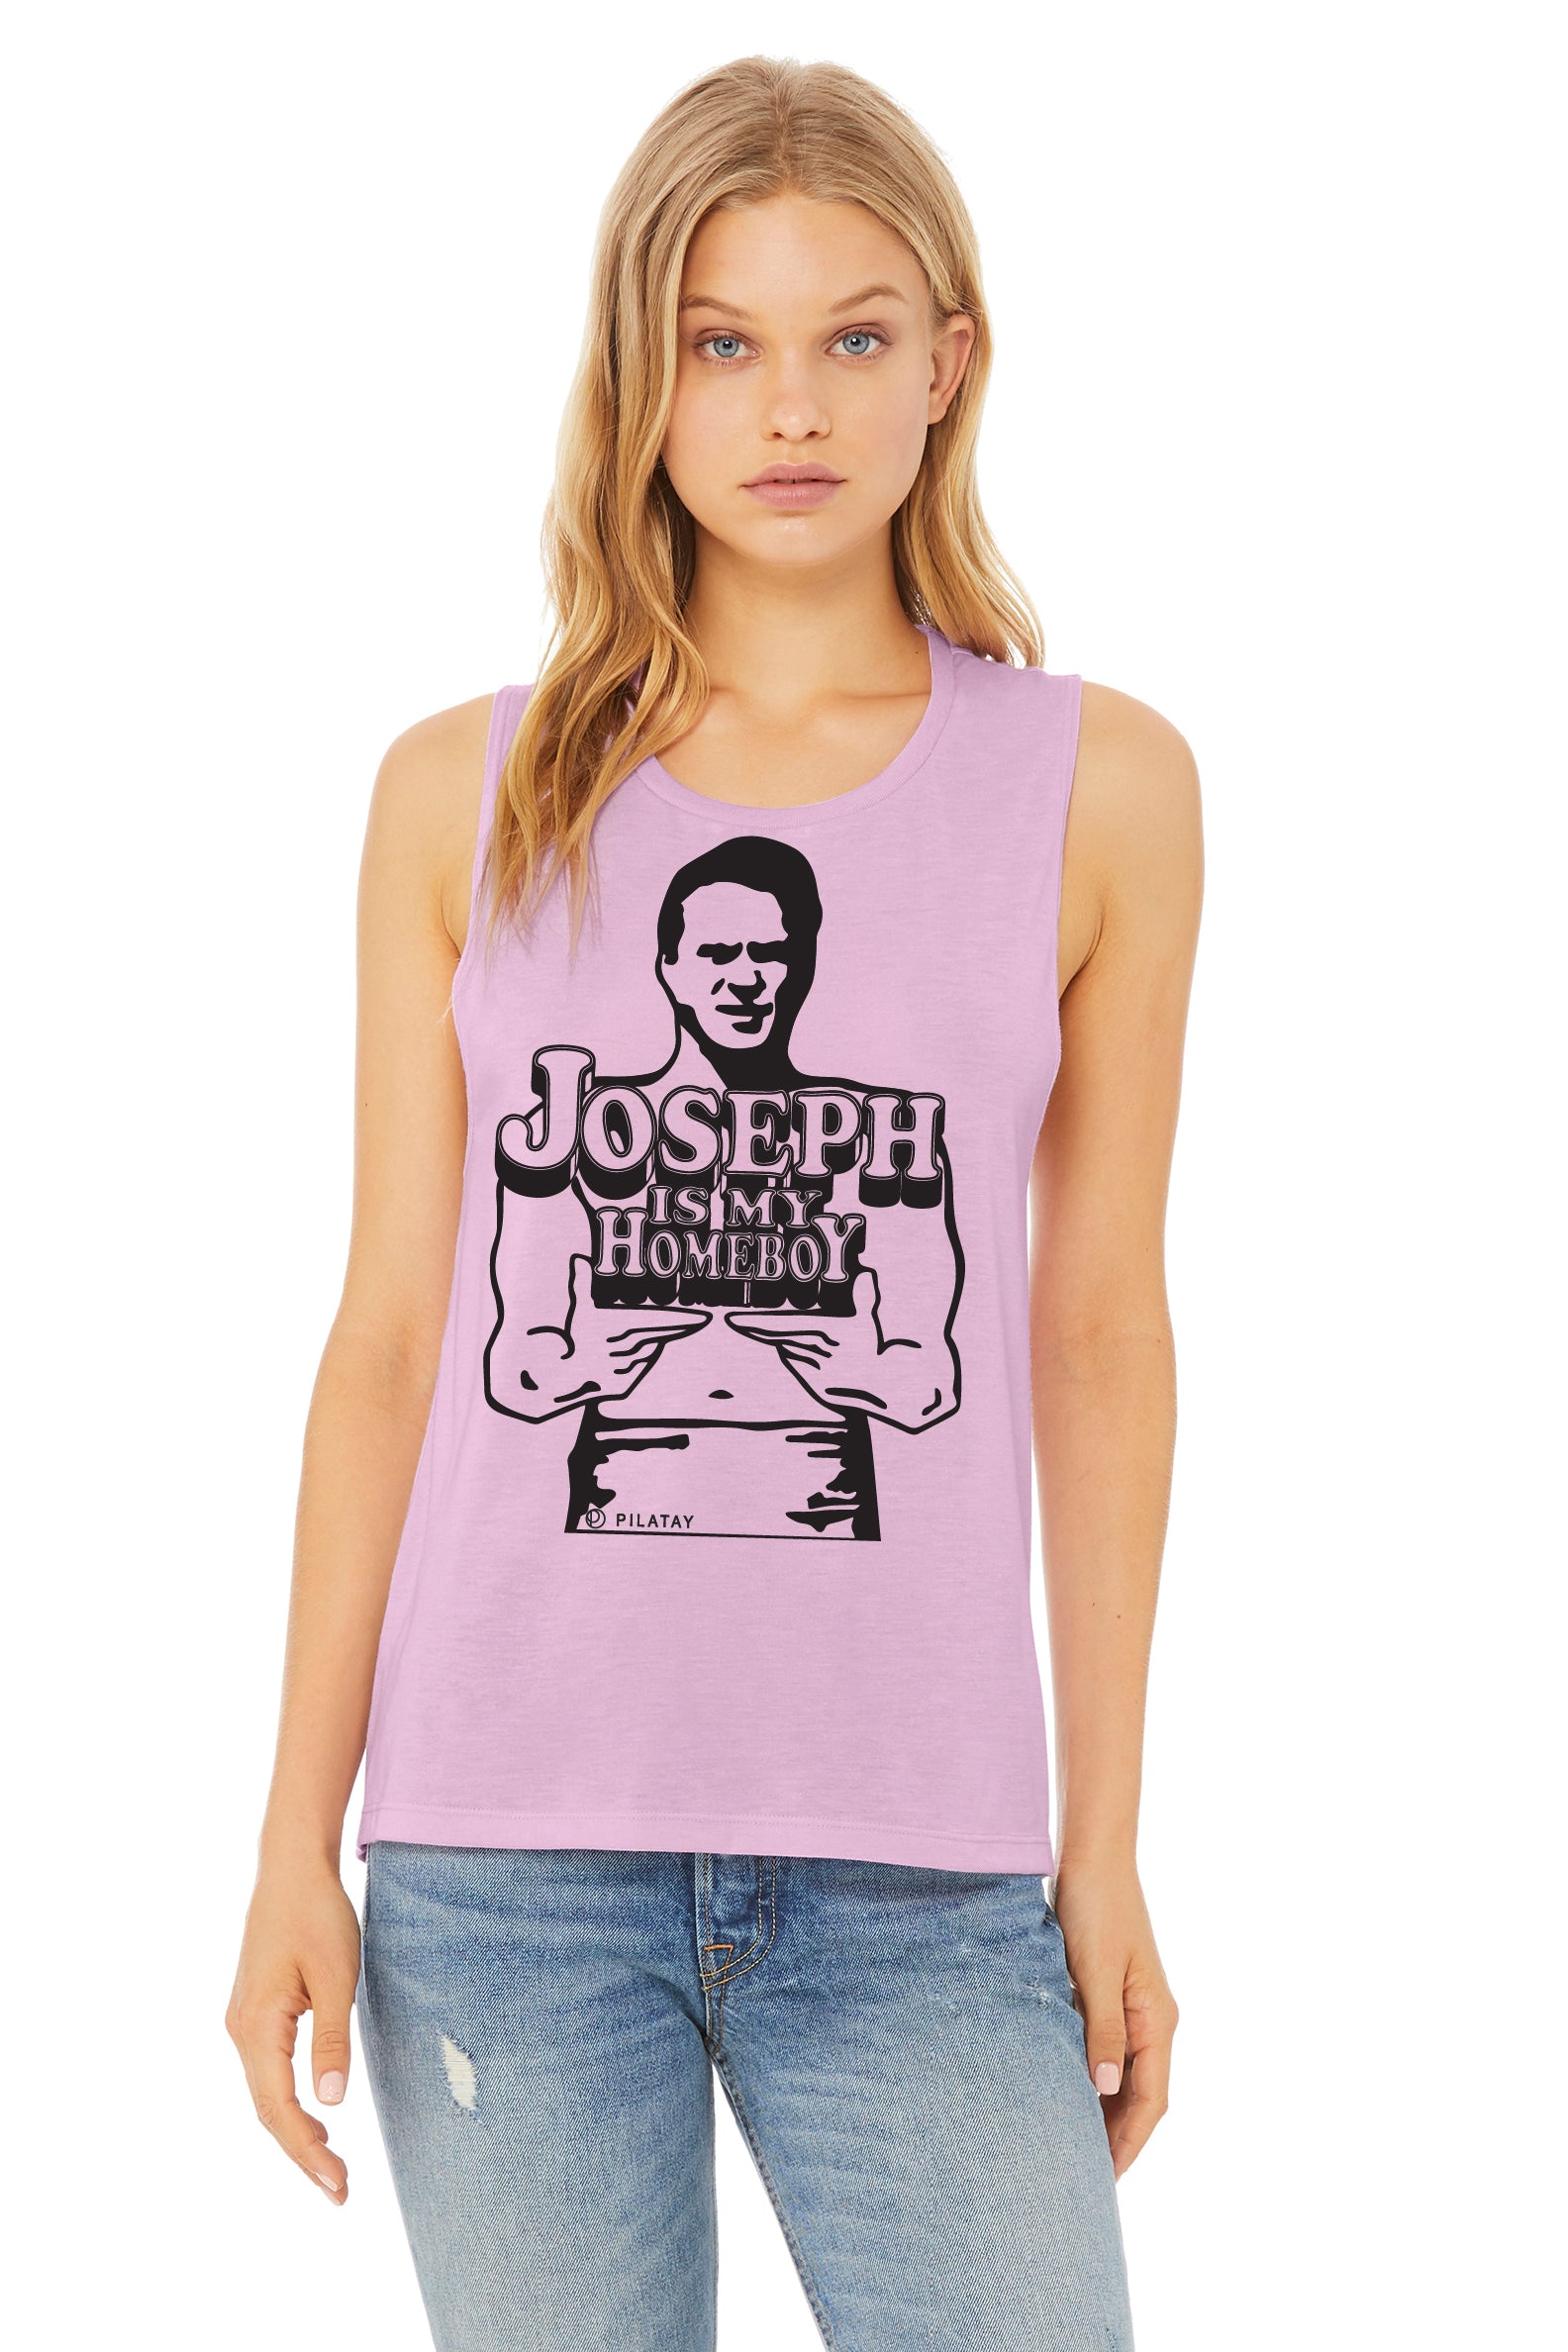 Joseph Pilates Shirts - Pilates Tank Tops - Joseph Is My Homeboy